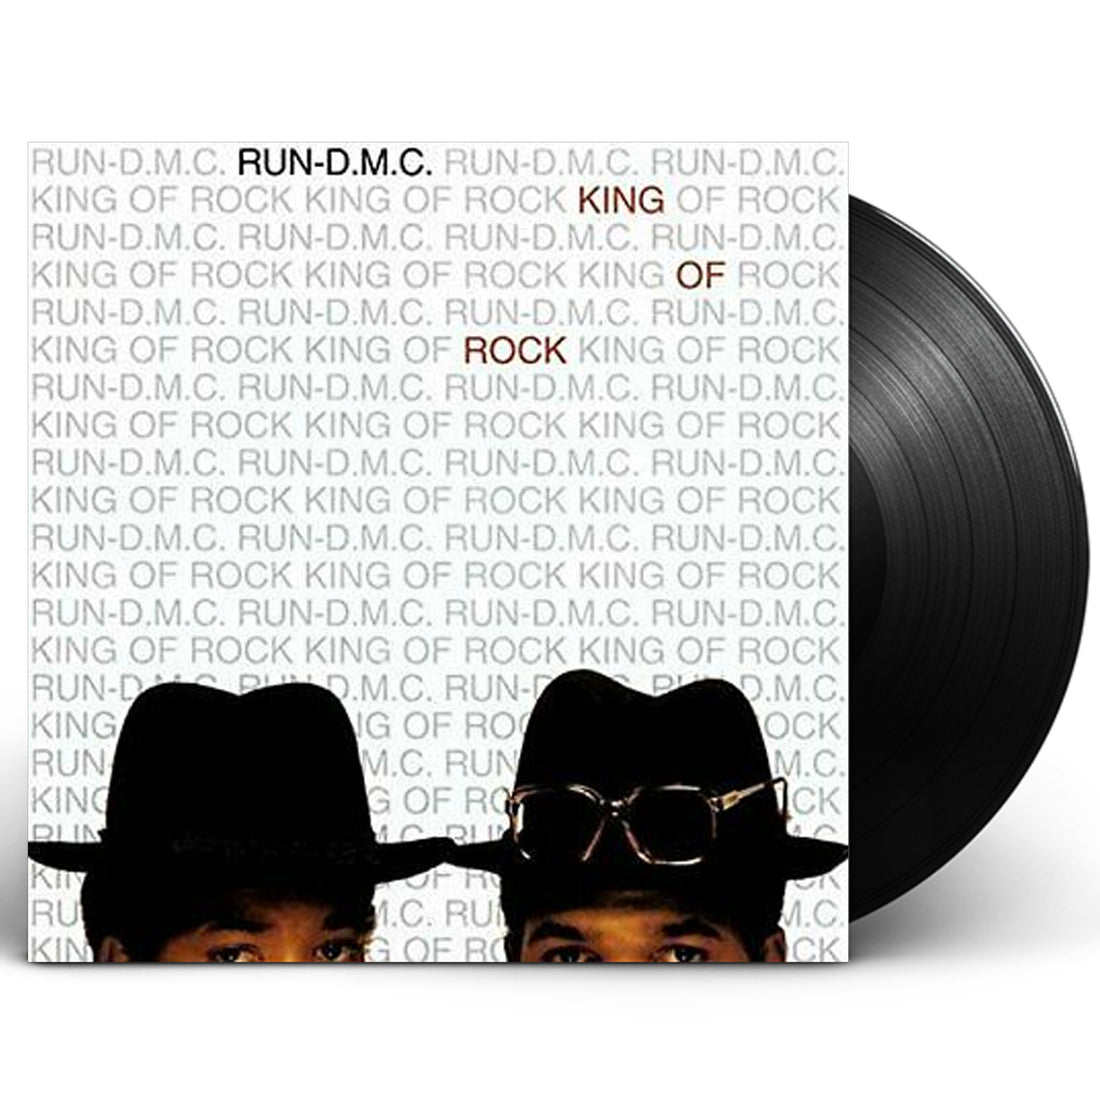 Run D.M.C. "King of Rock" LP Vinyl